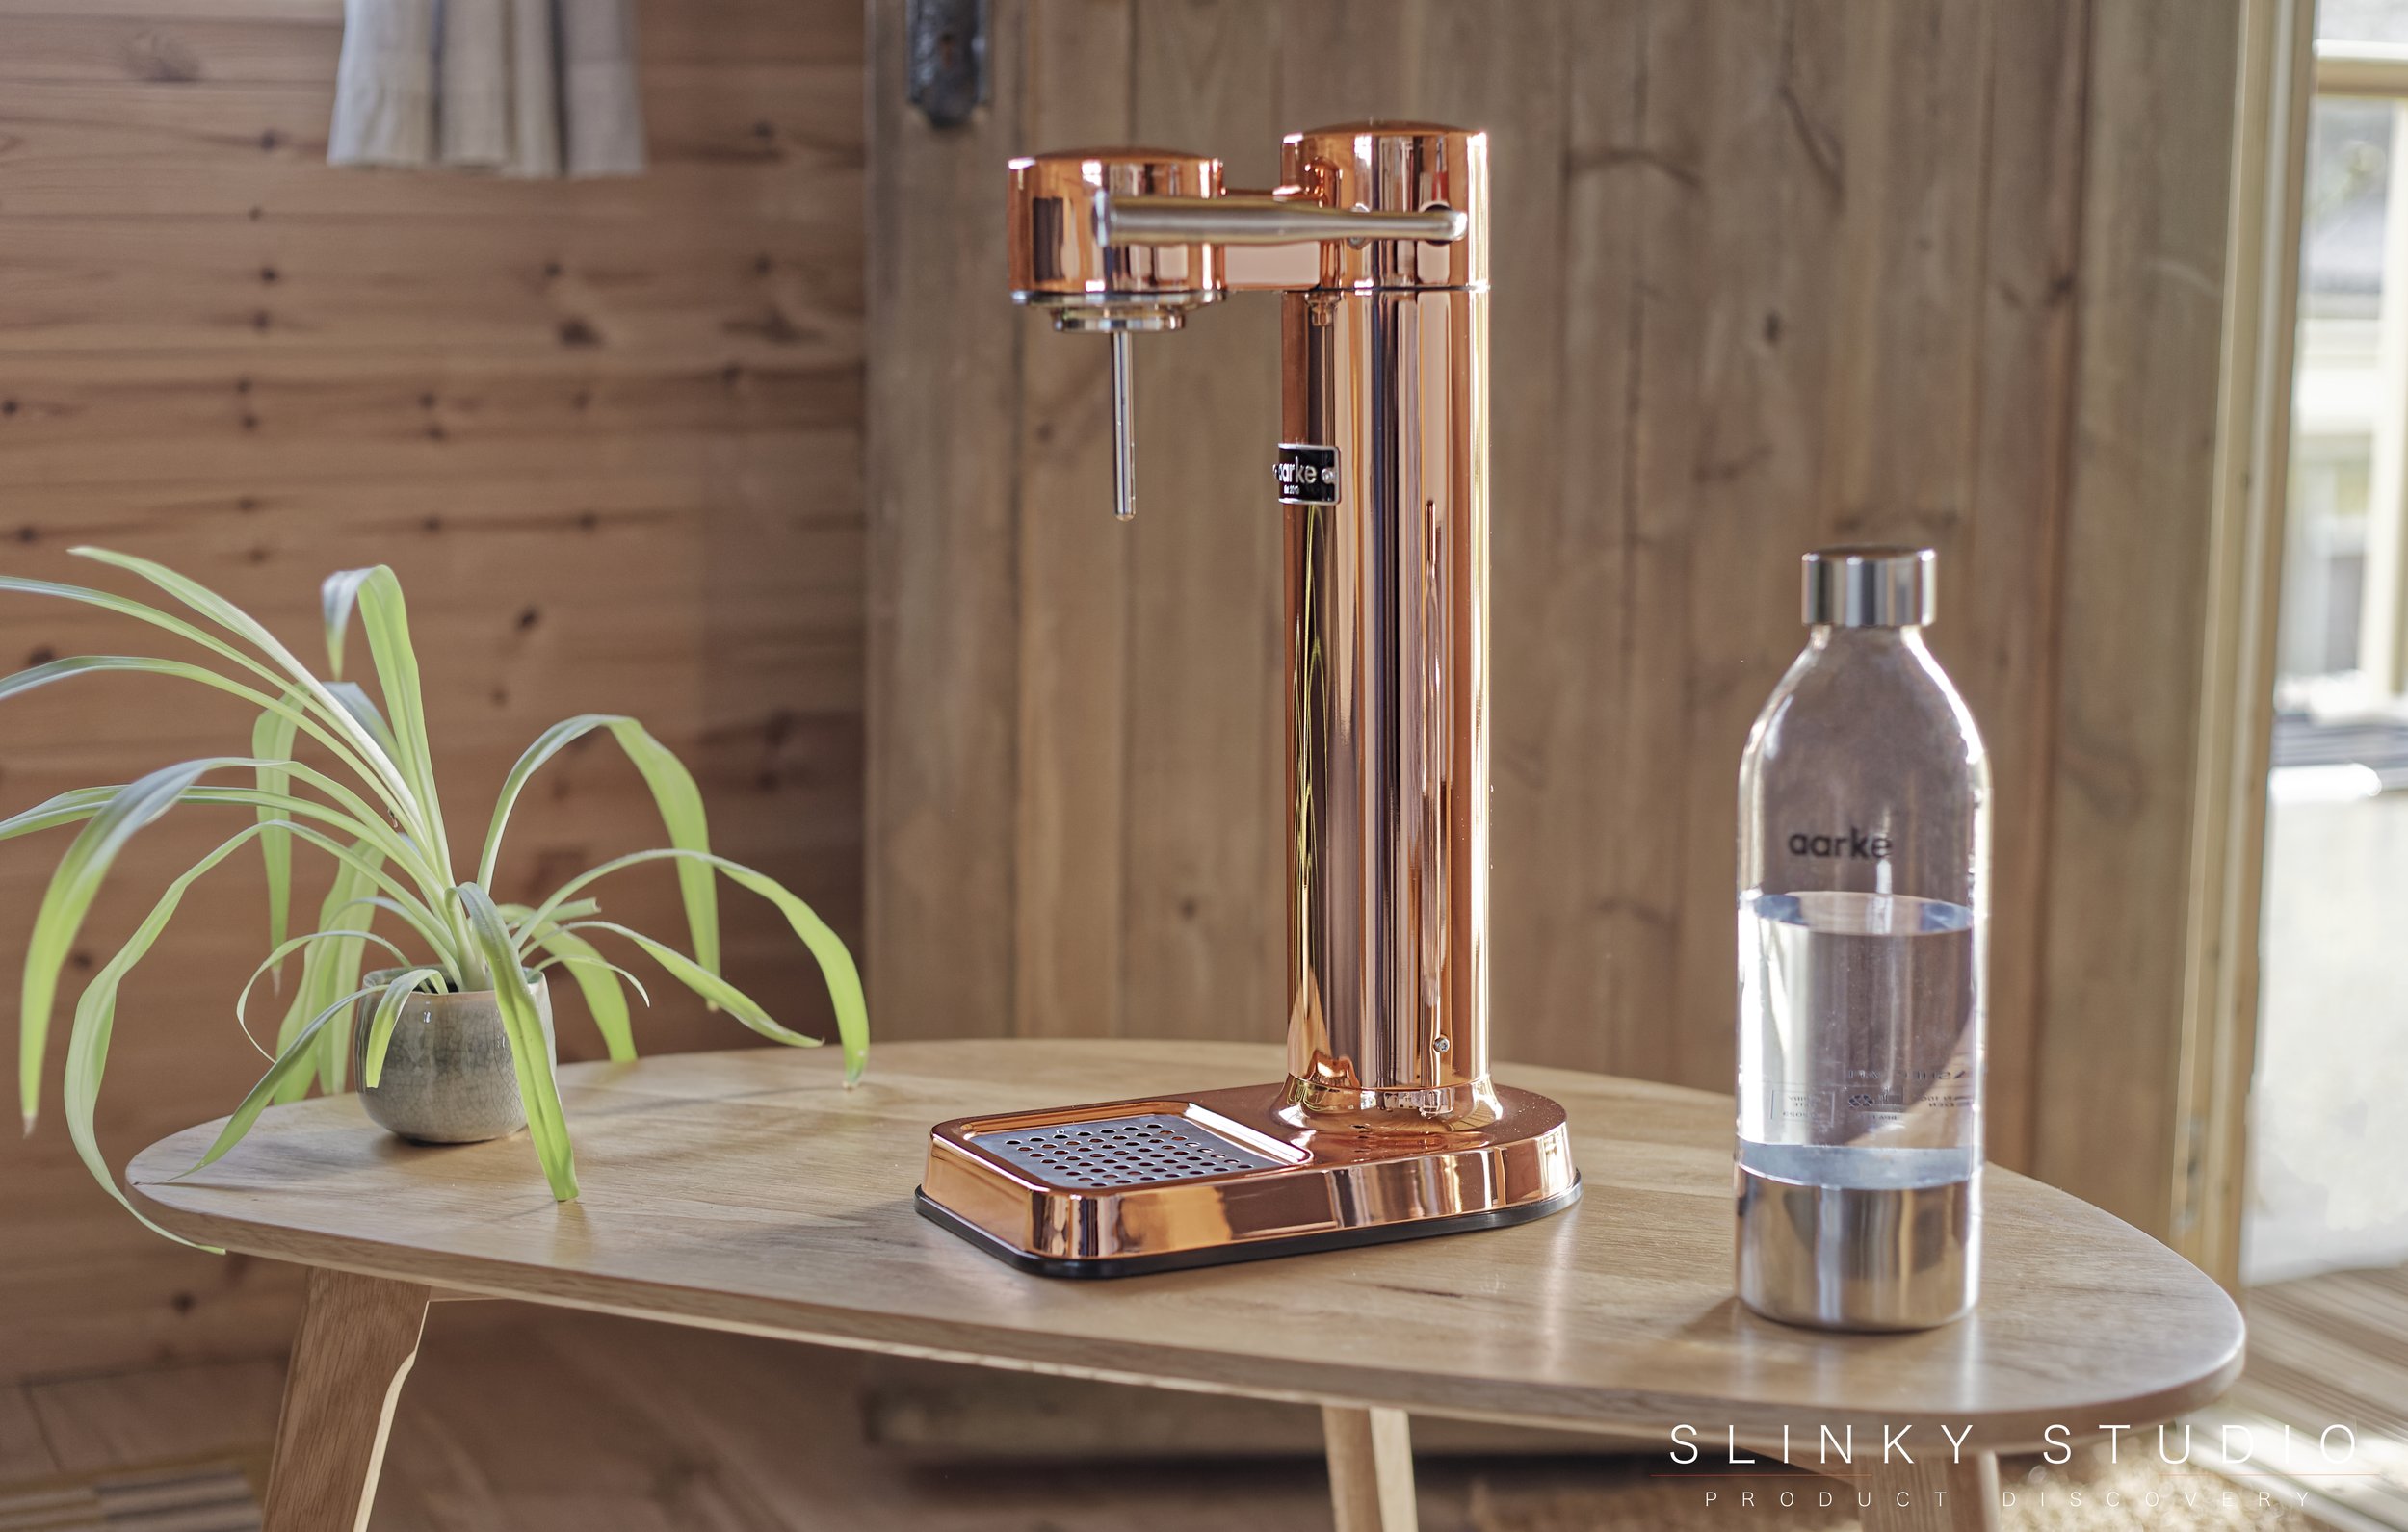 Aarke Carbonator III Sparkling Water Maker Wooden Table.jpg